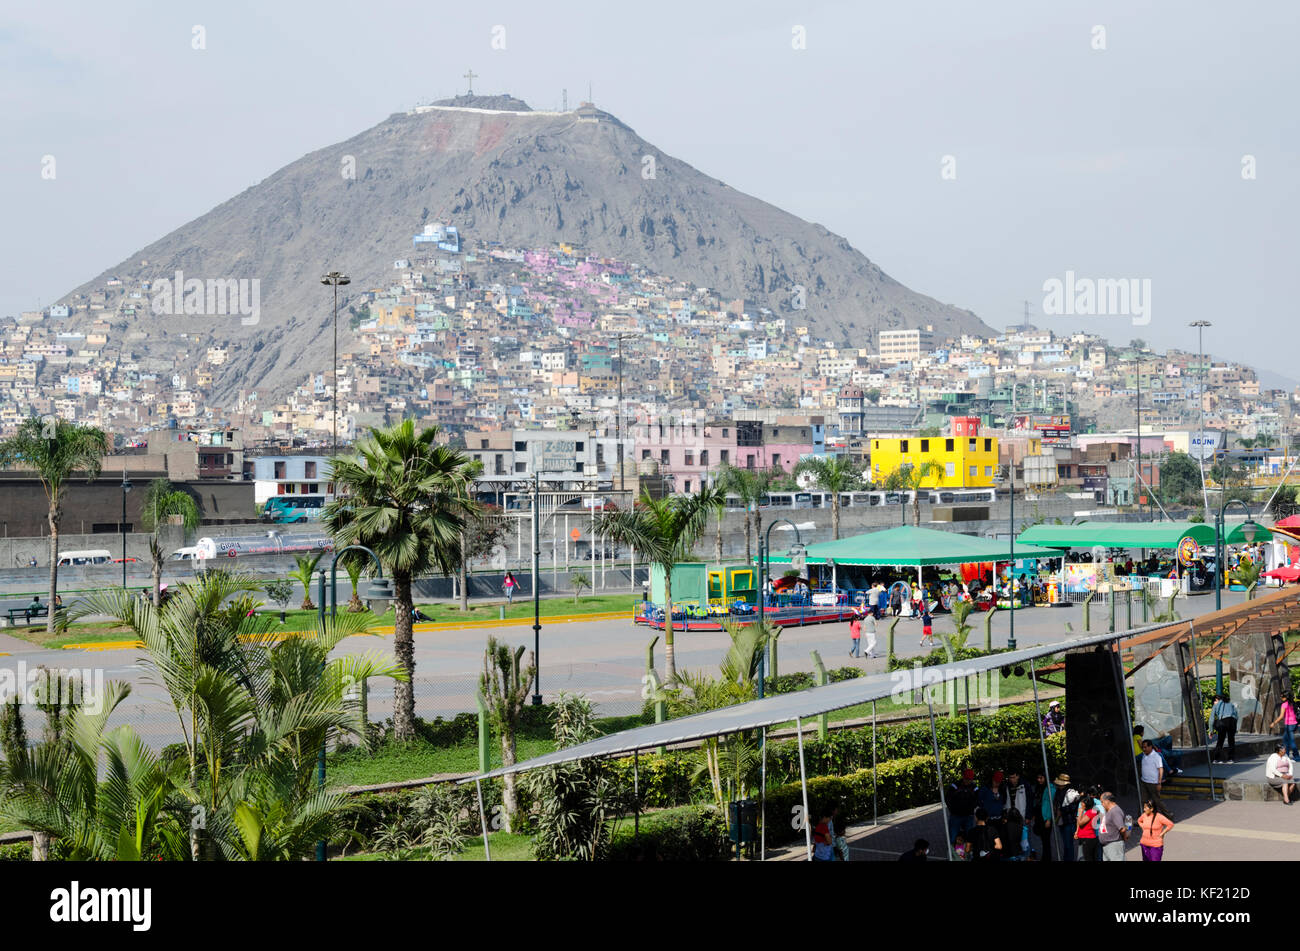 San Cristobal Hügel/Cerro San Cristobal. Lima, Peru. Stockfoto